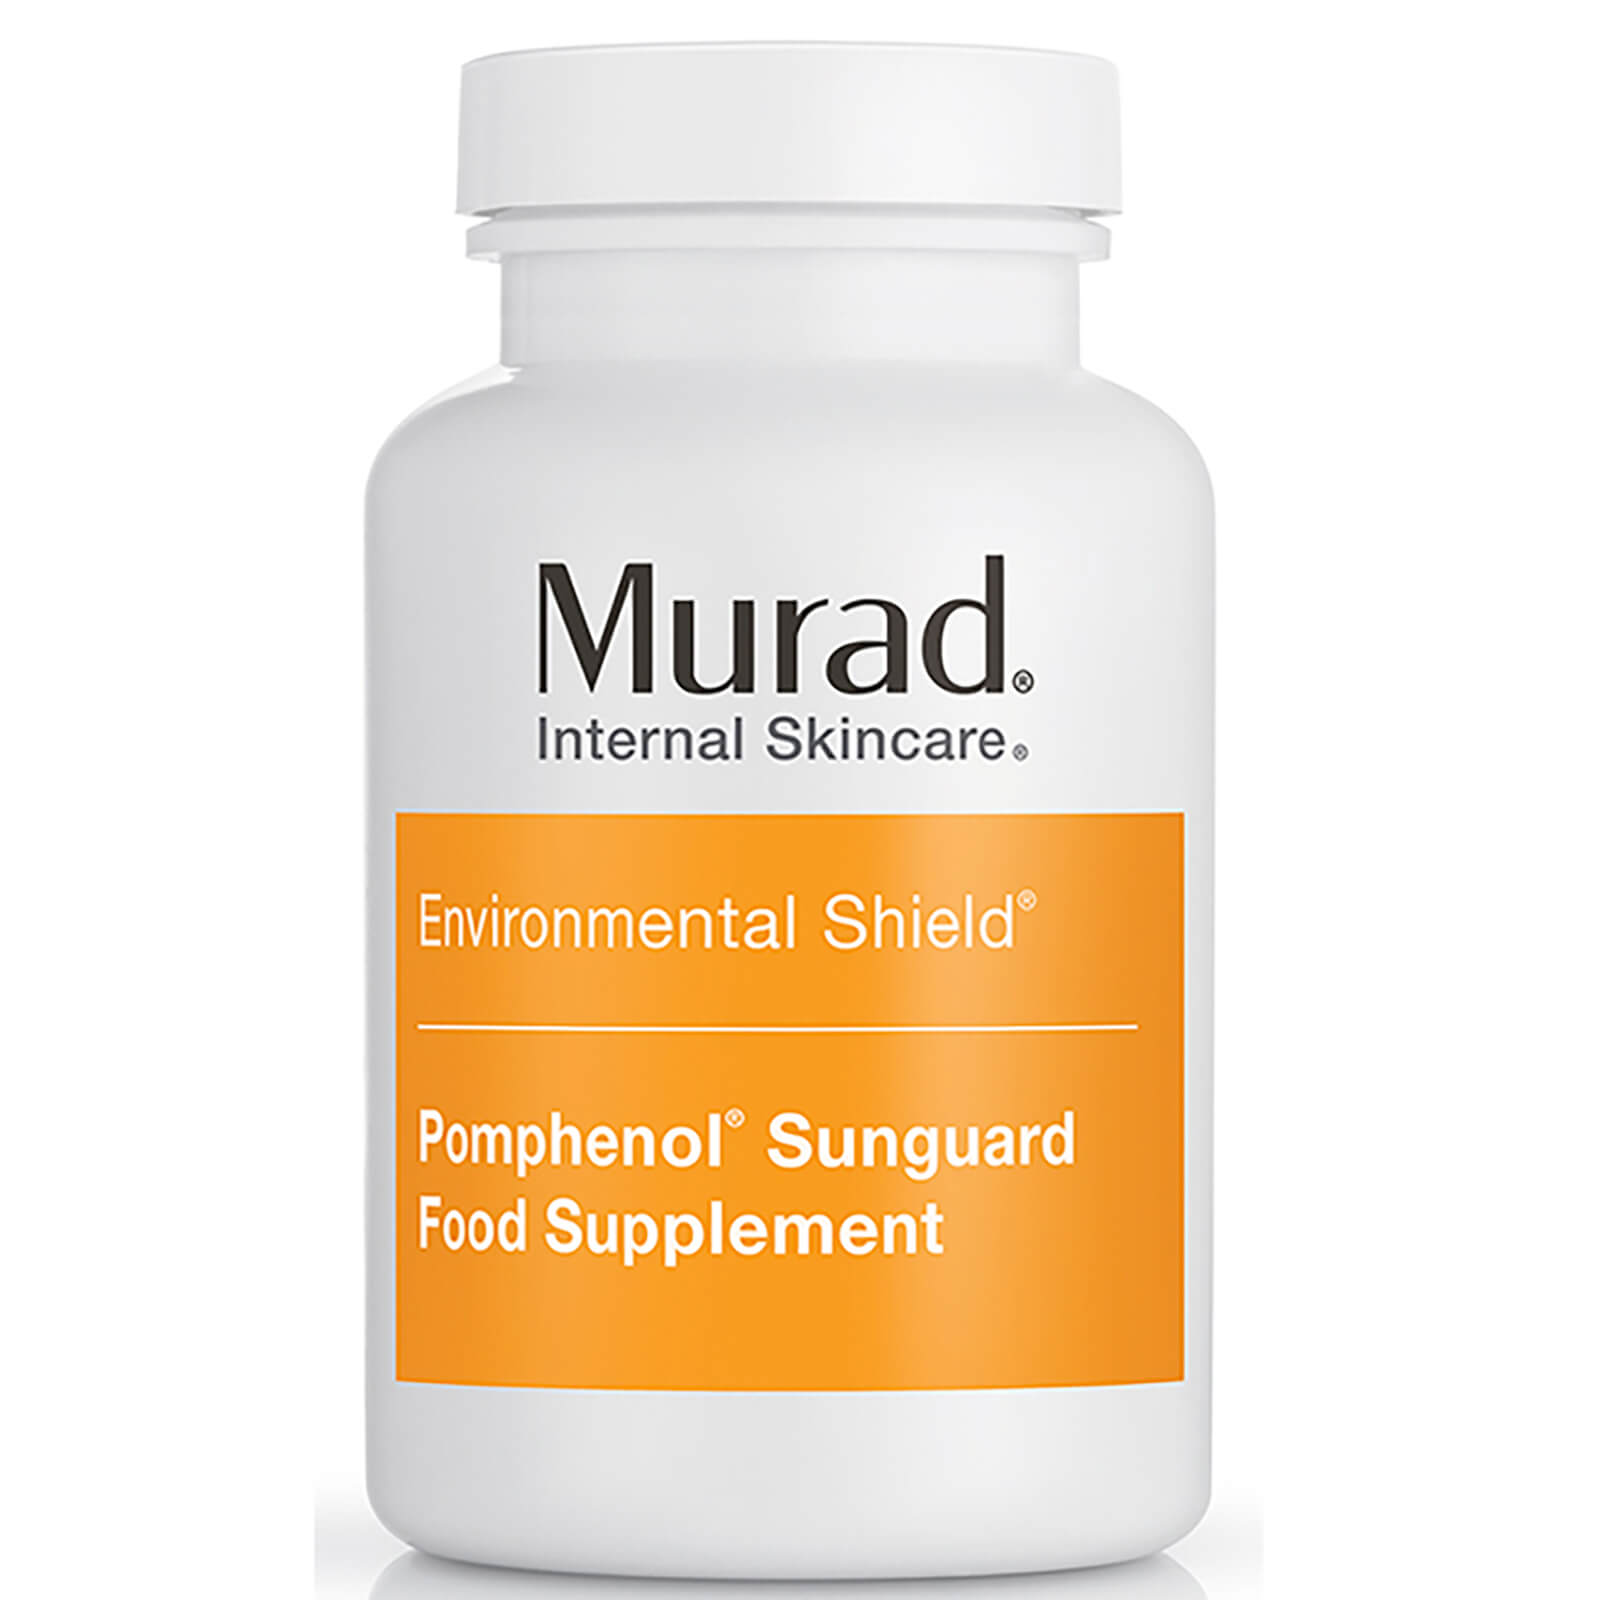 Murad Pomphenol Sunguard Dietary Supplement